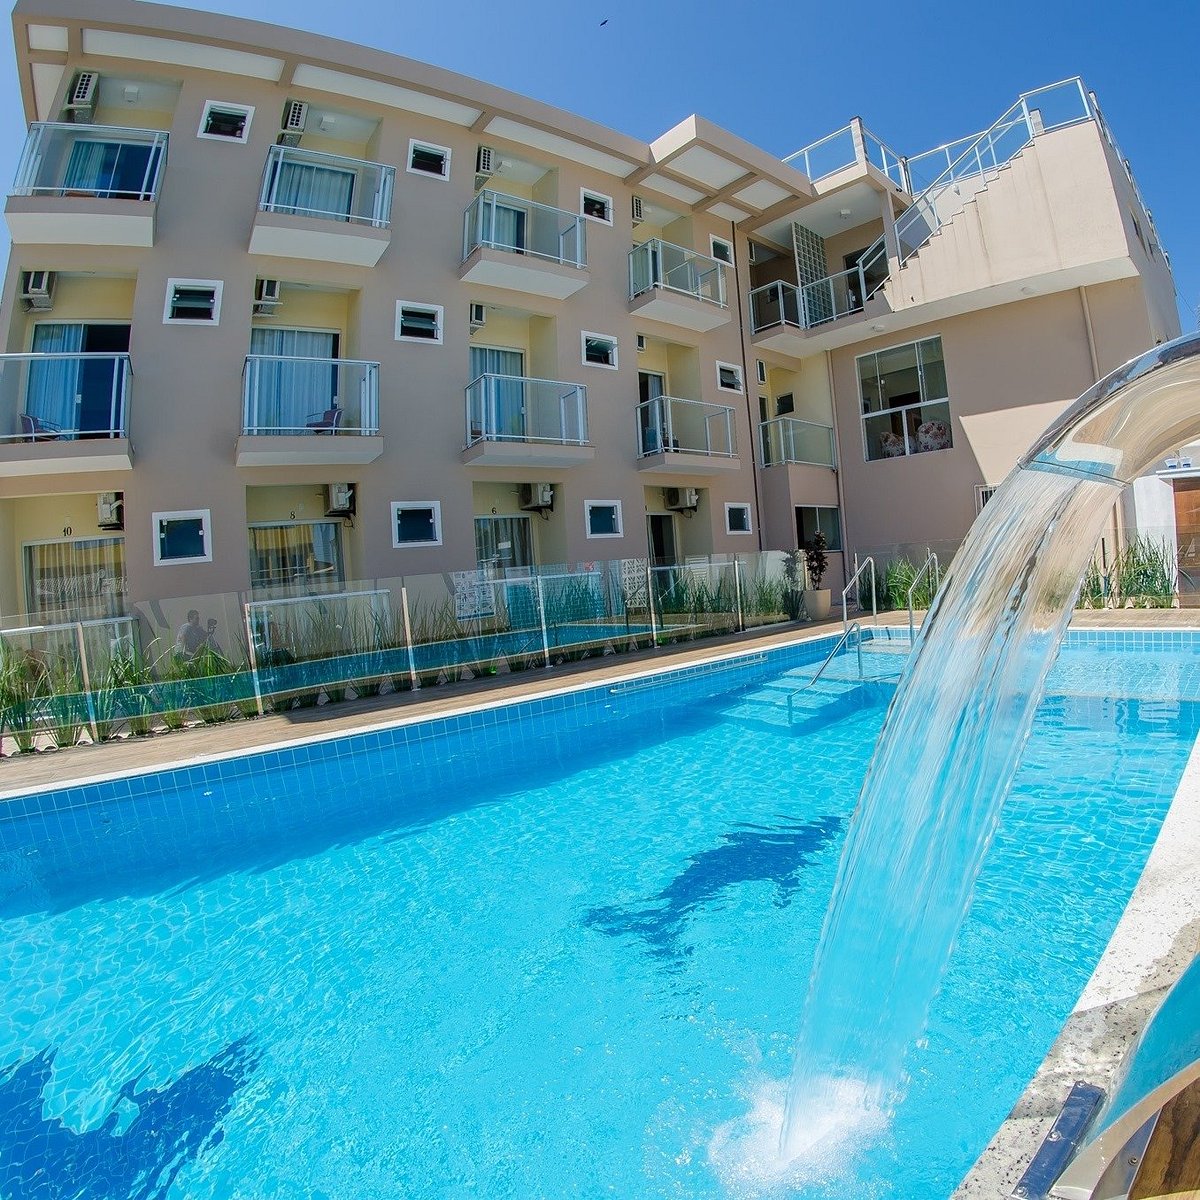 Hotels near Beto Carrero World, Penha - Amazing Deals on 520 Hotels